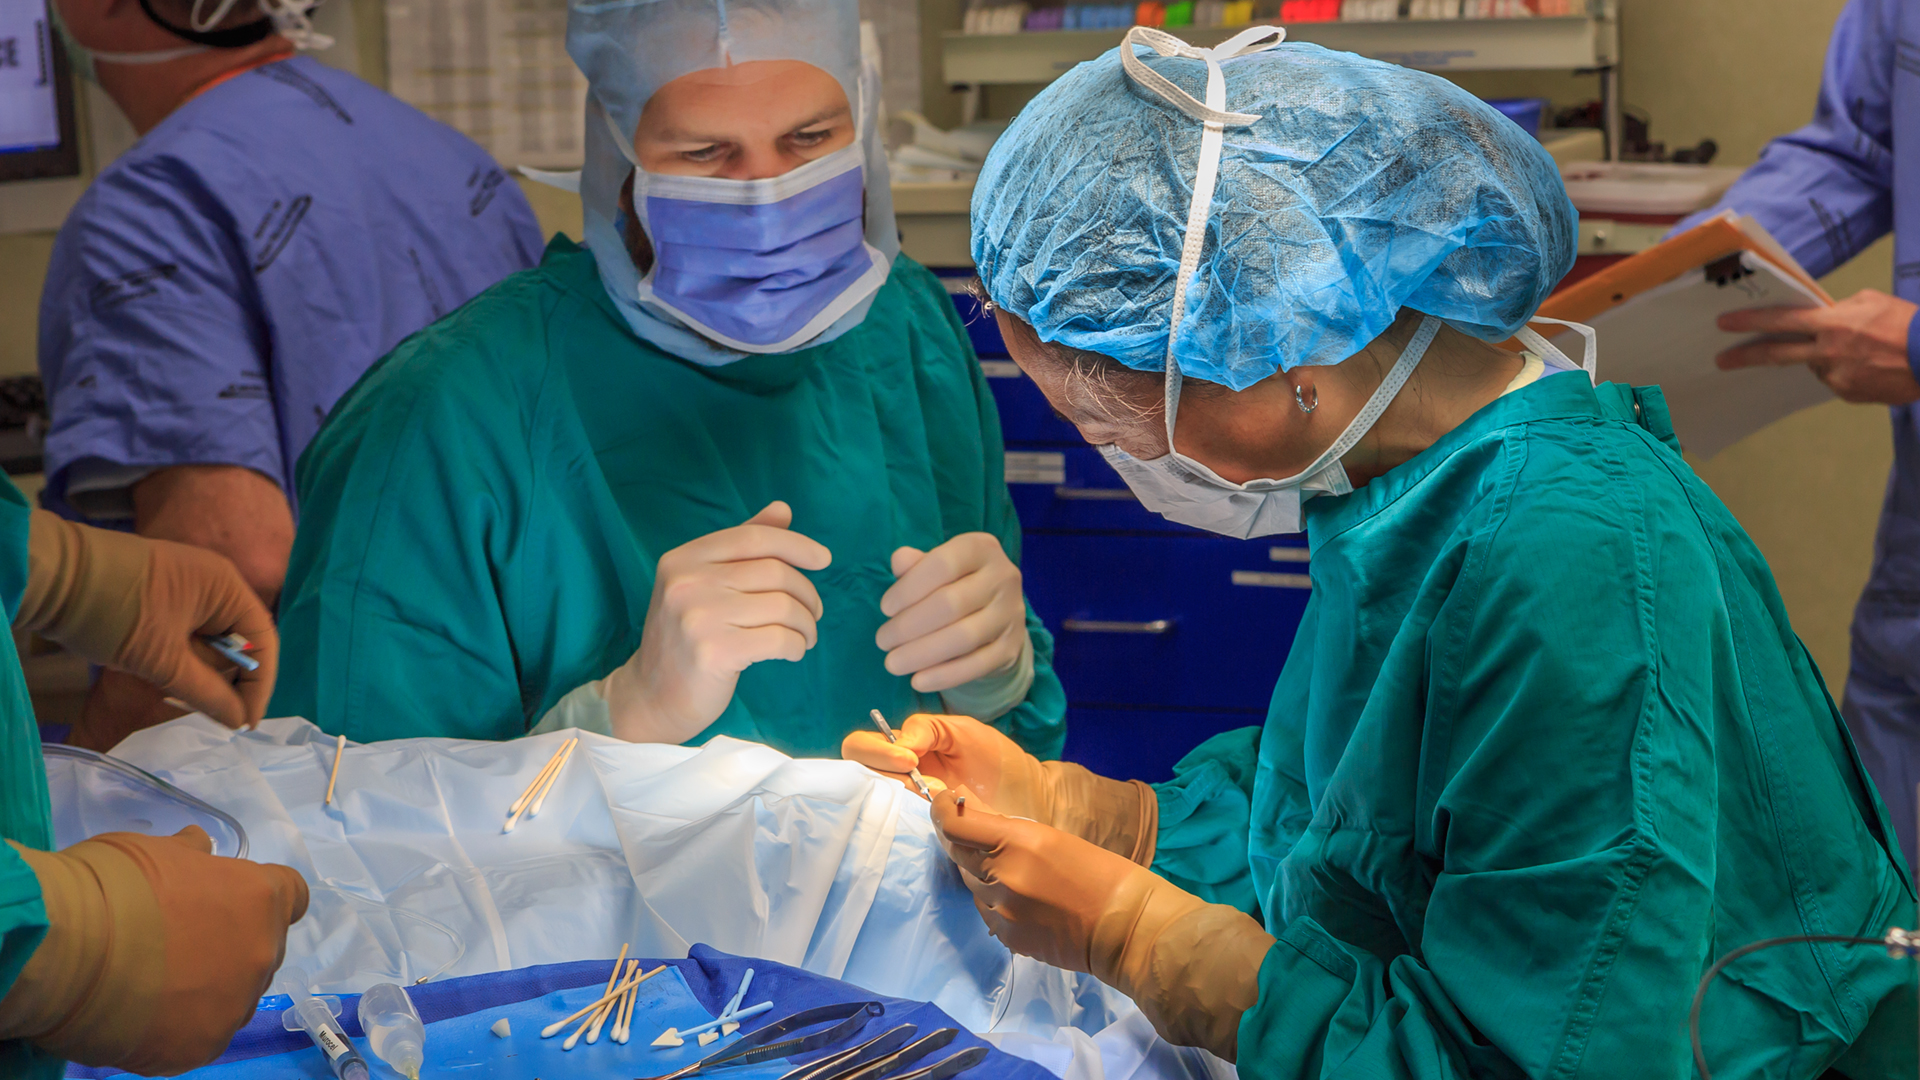 Surgeons performing retina surgery, fully masked